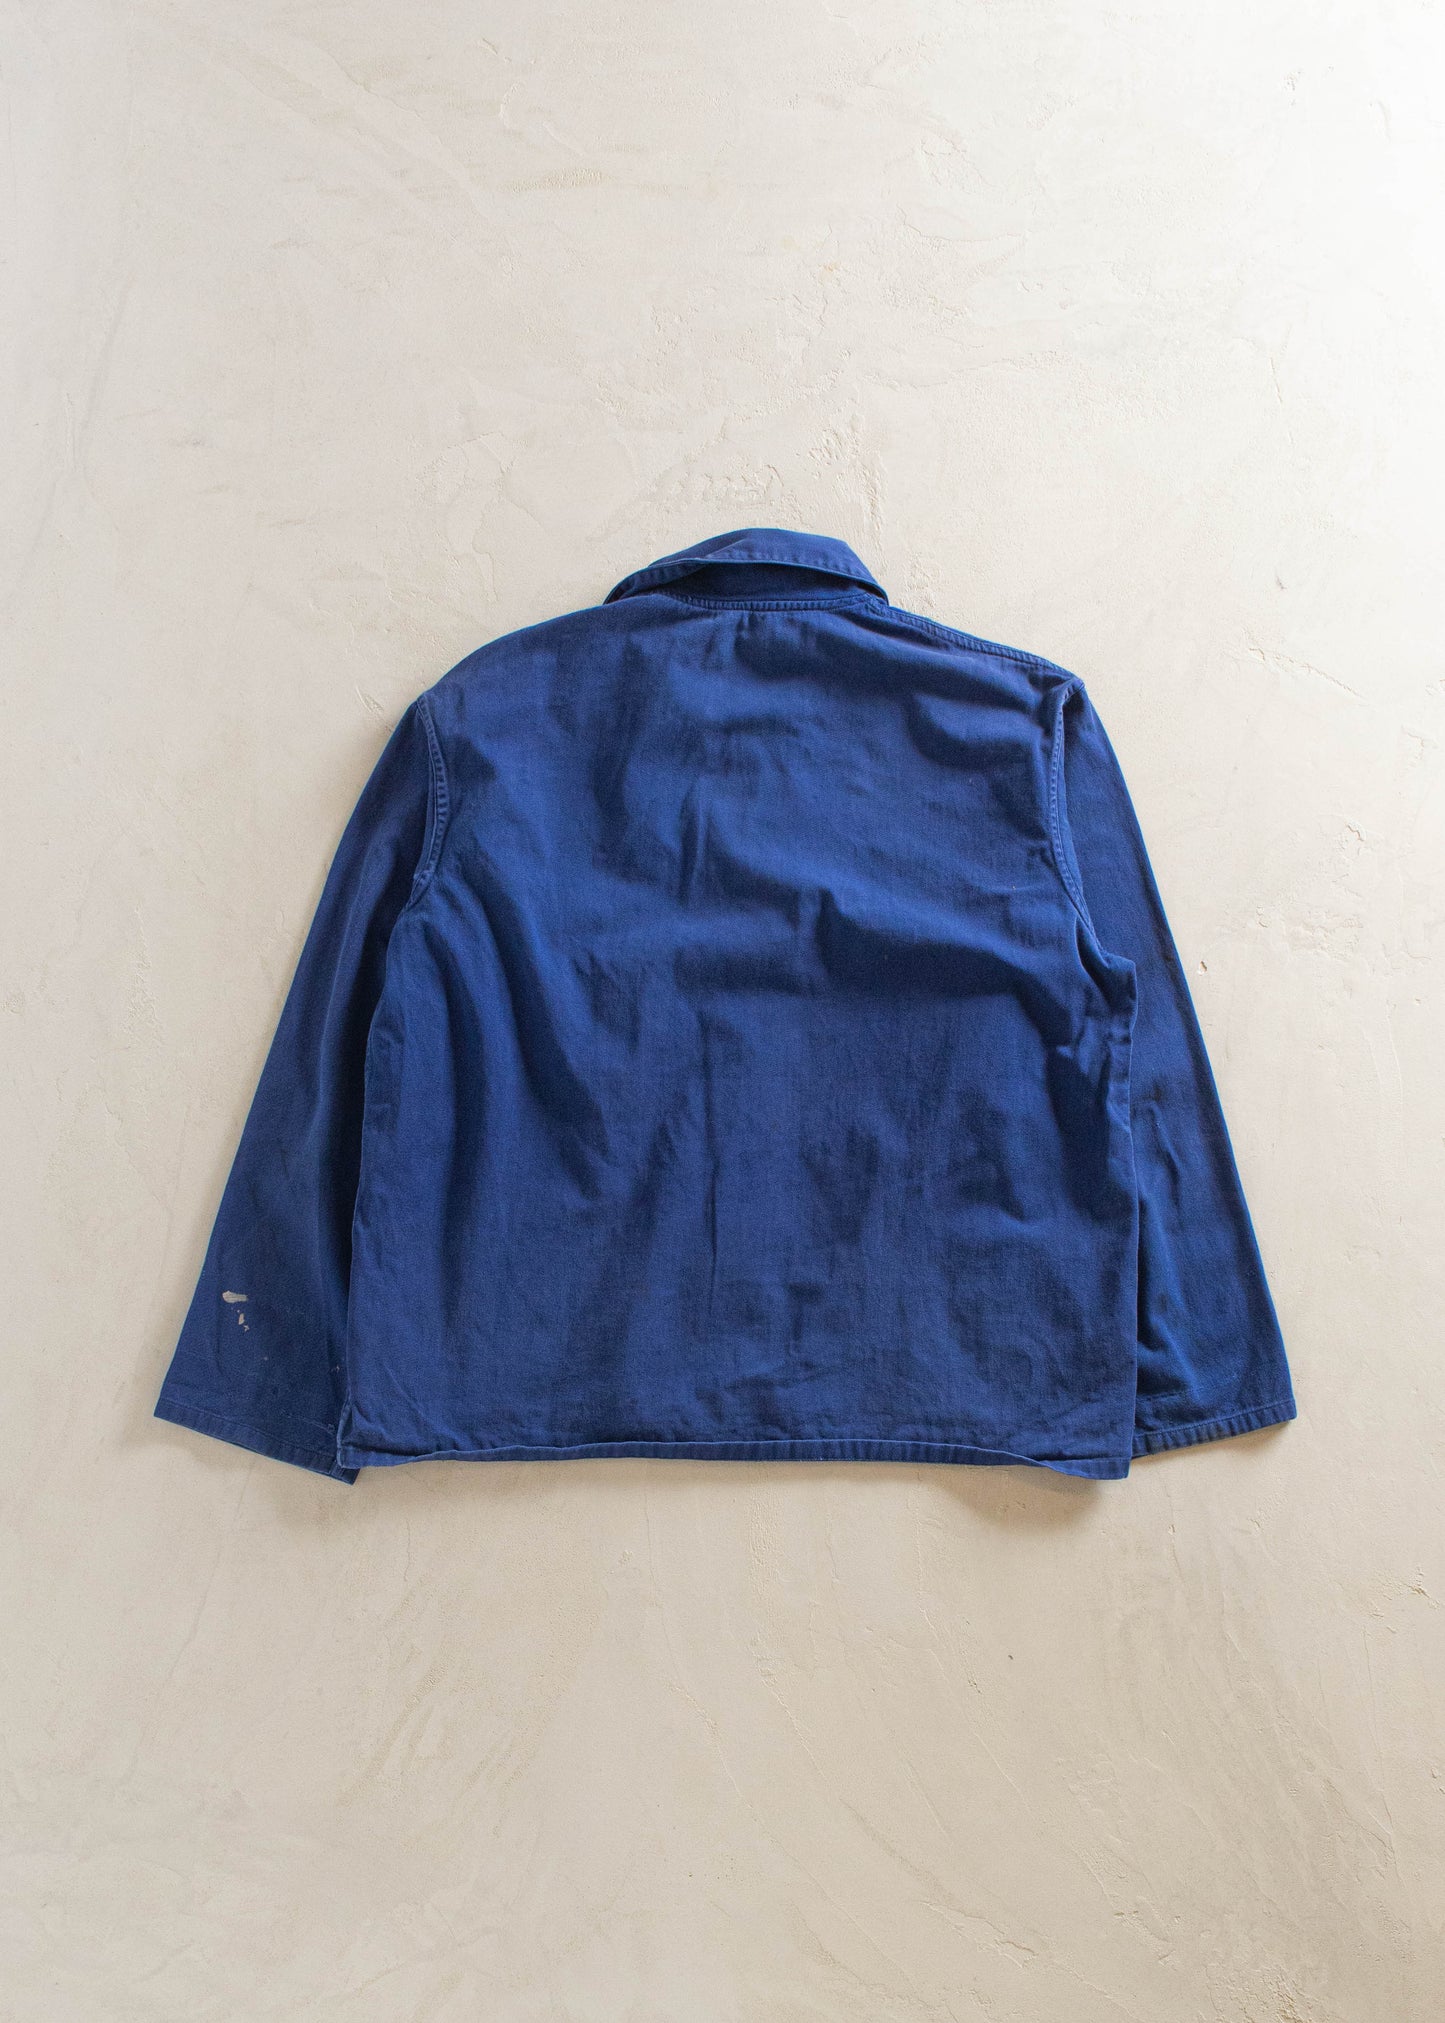 1980s French Workwear Chore Jacket Size M/L